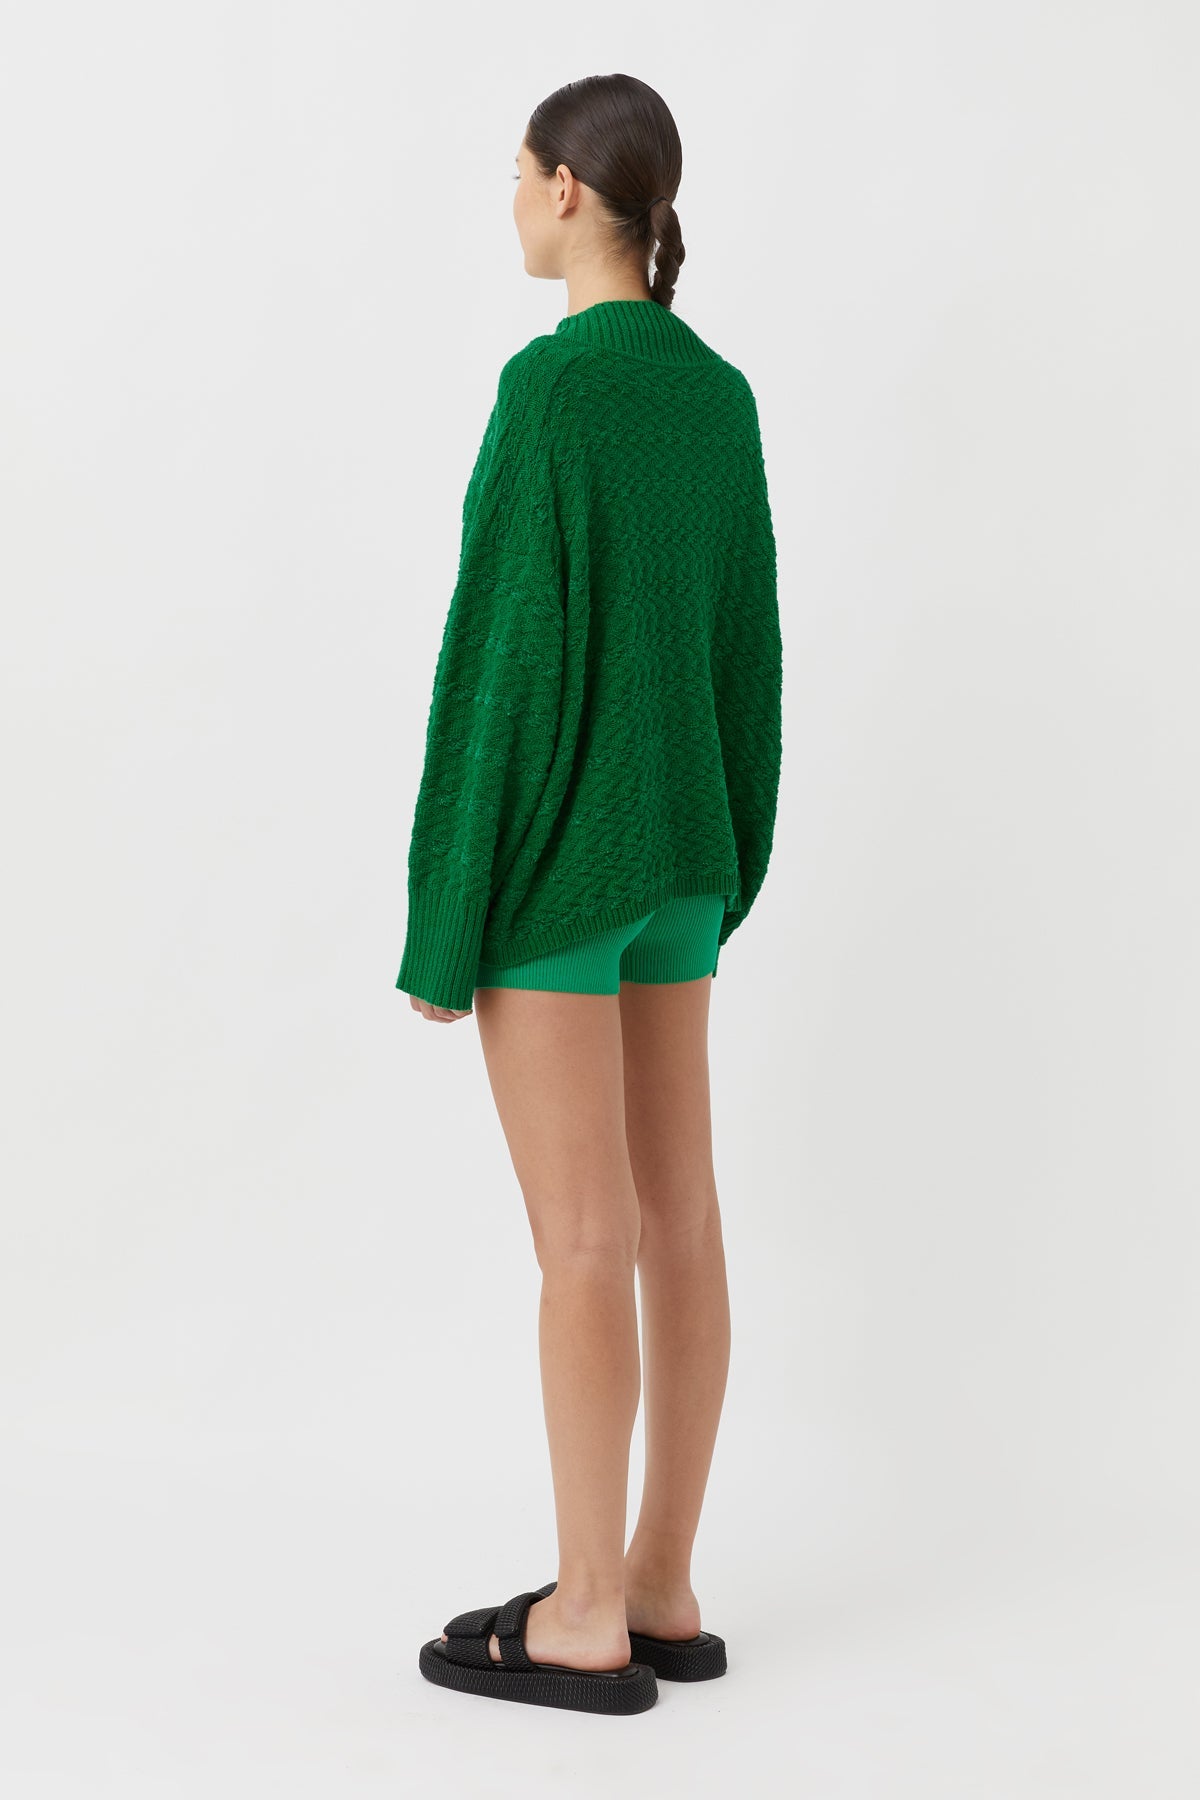 Ainsley Stripe Sweater - Emerald